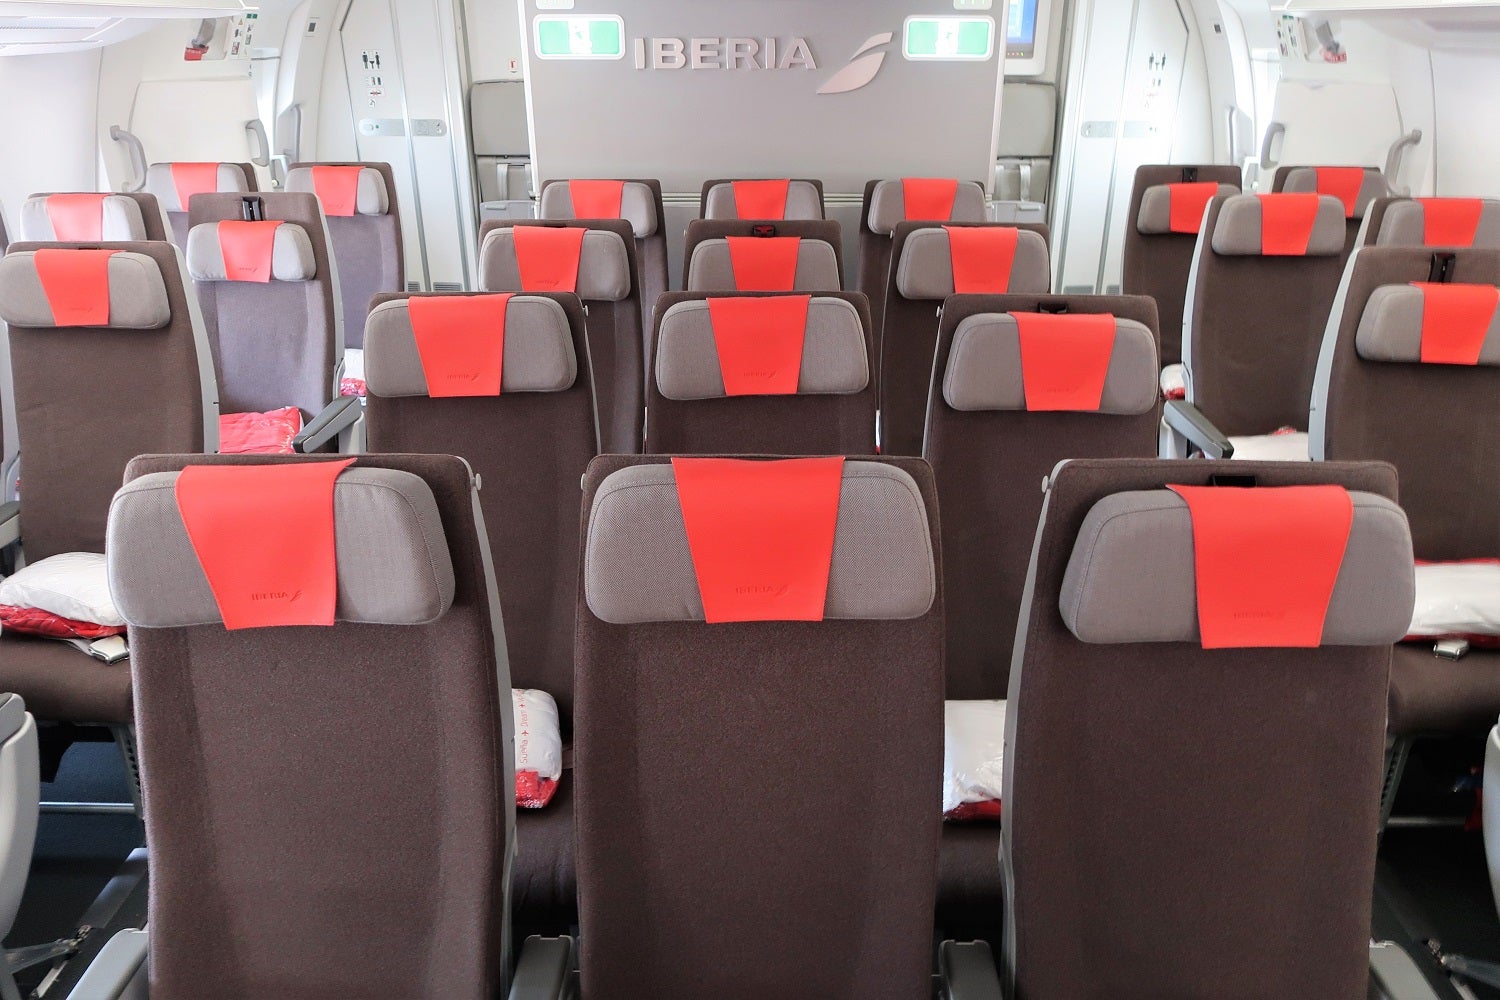 Inside Iberia airplane